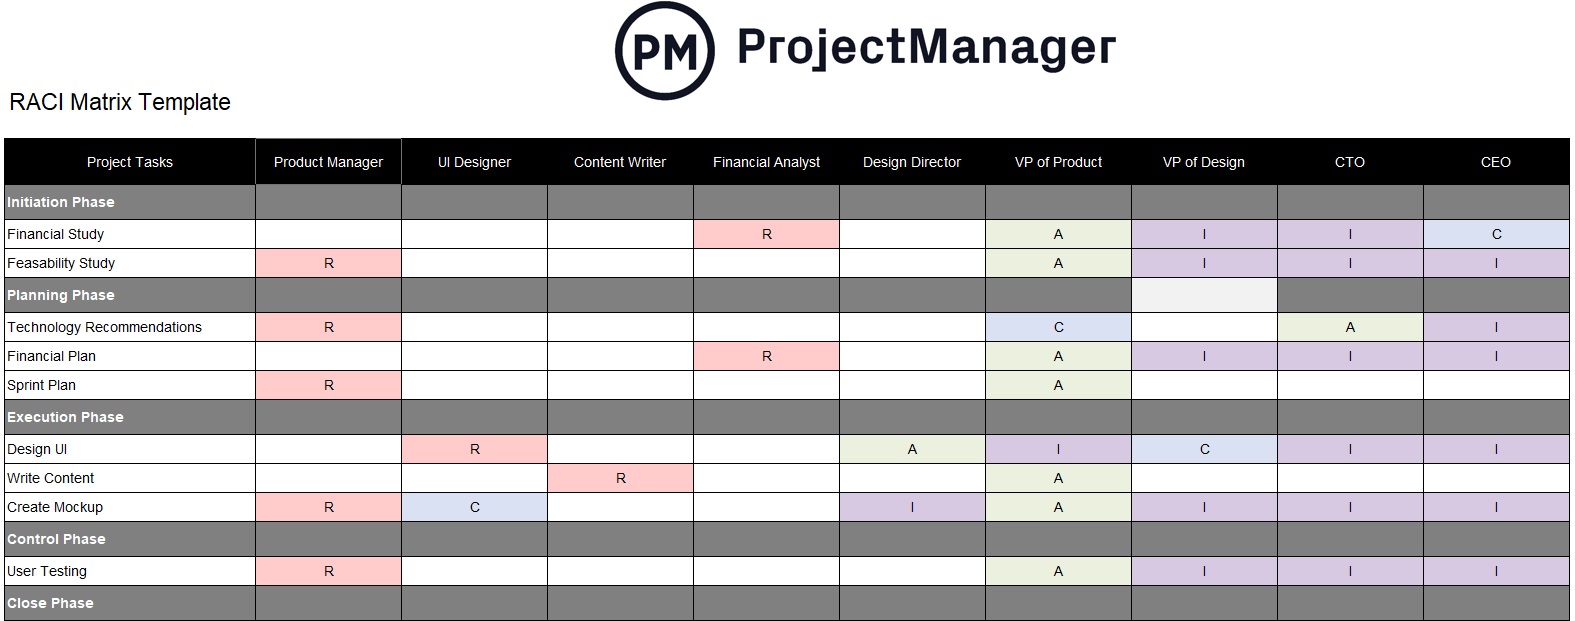 ProjectManager's free RACI matrix template